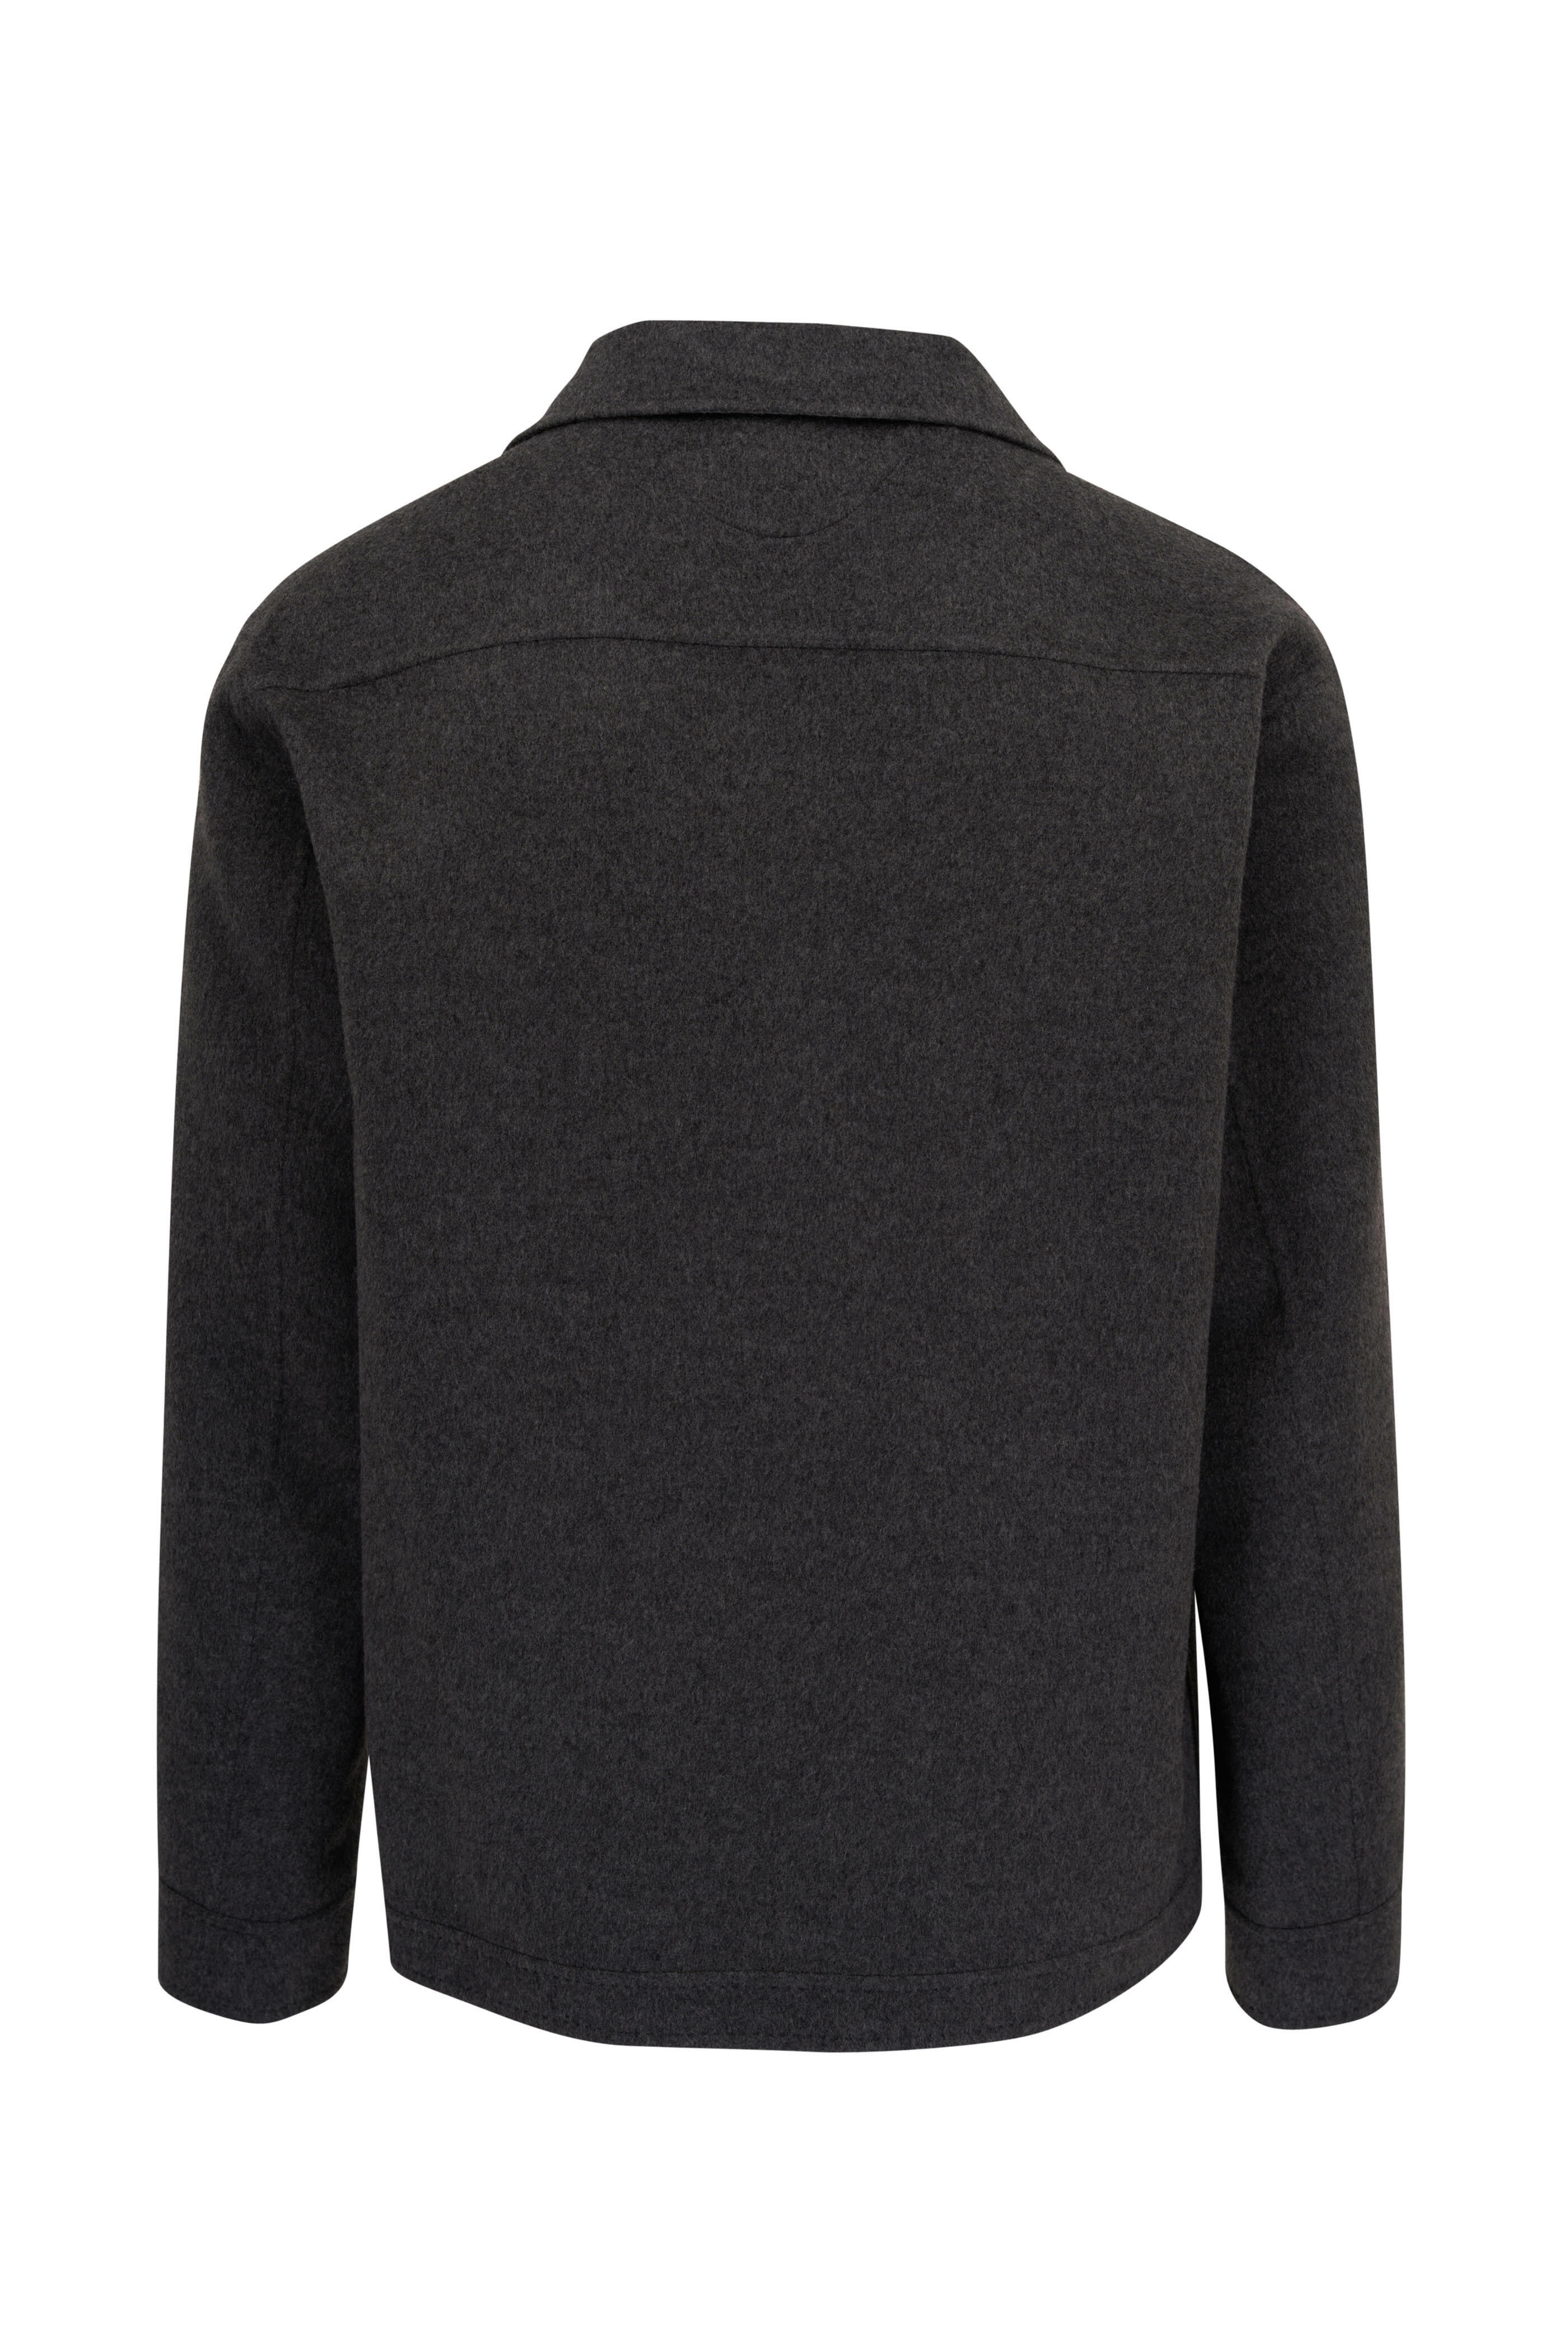 Kiton - Gray Wool & Cashmere Shacket | Mitchell Stores